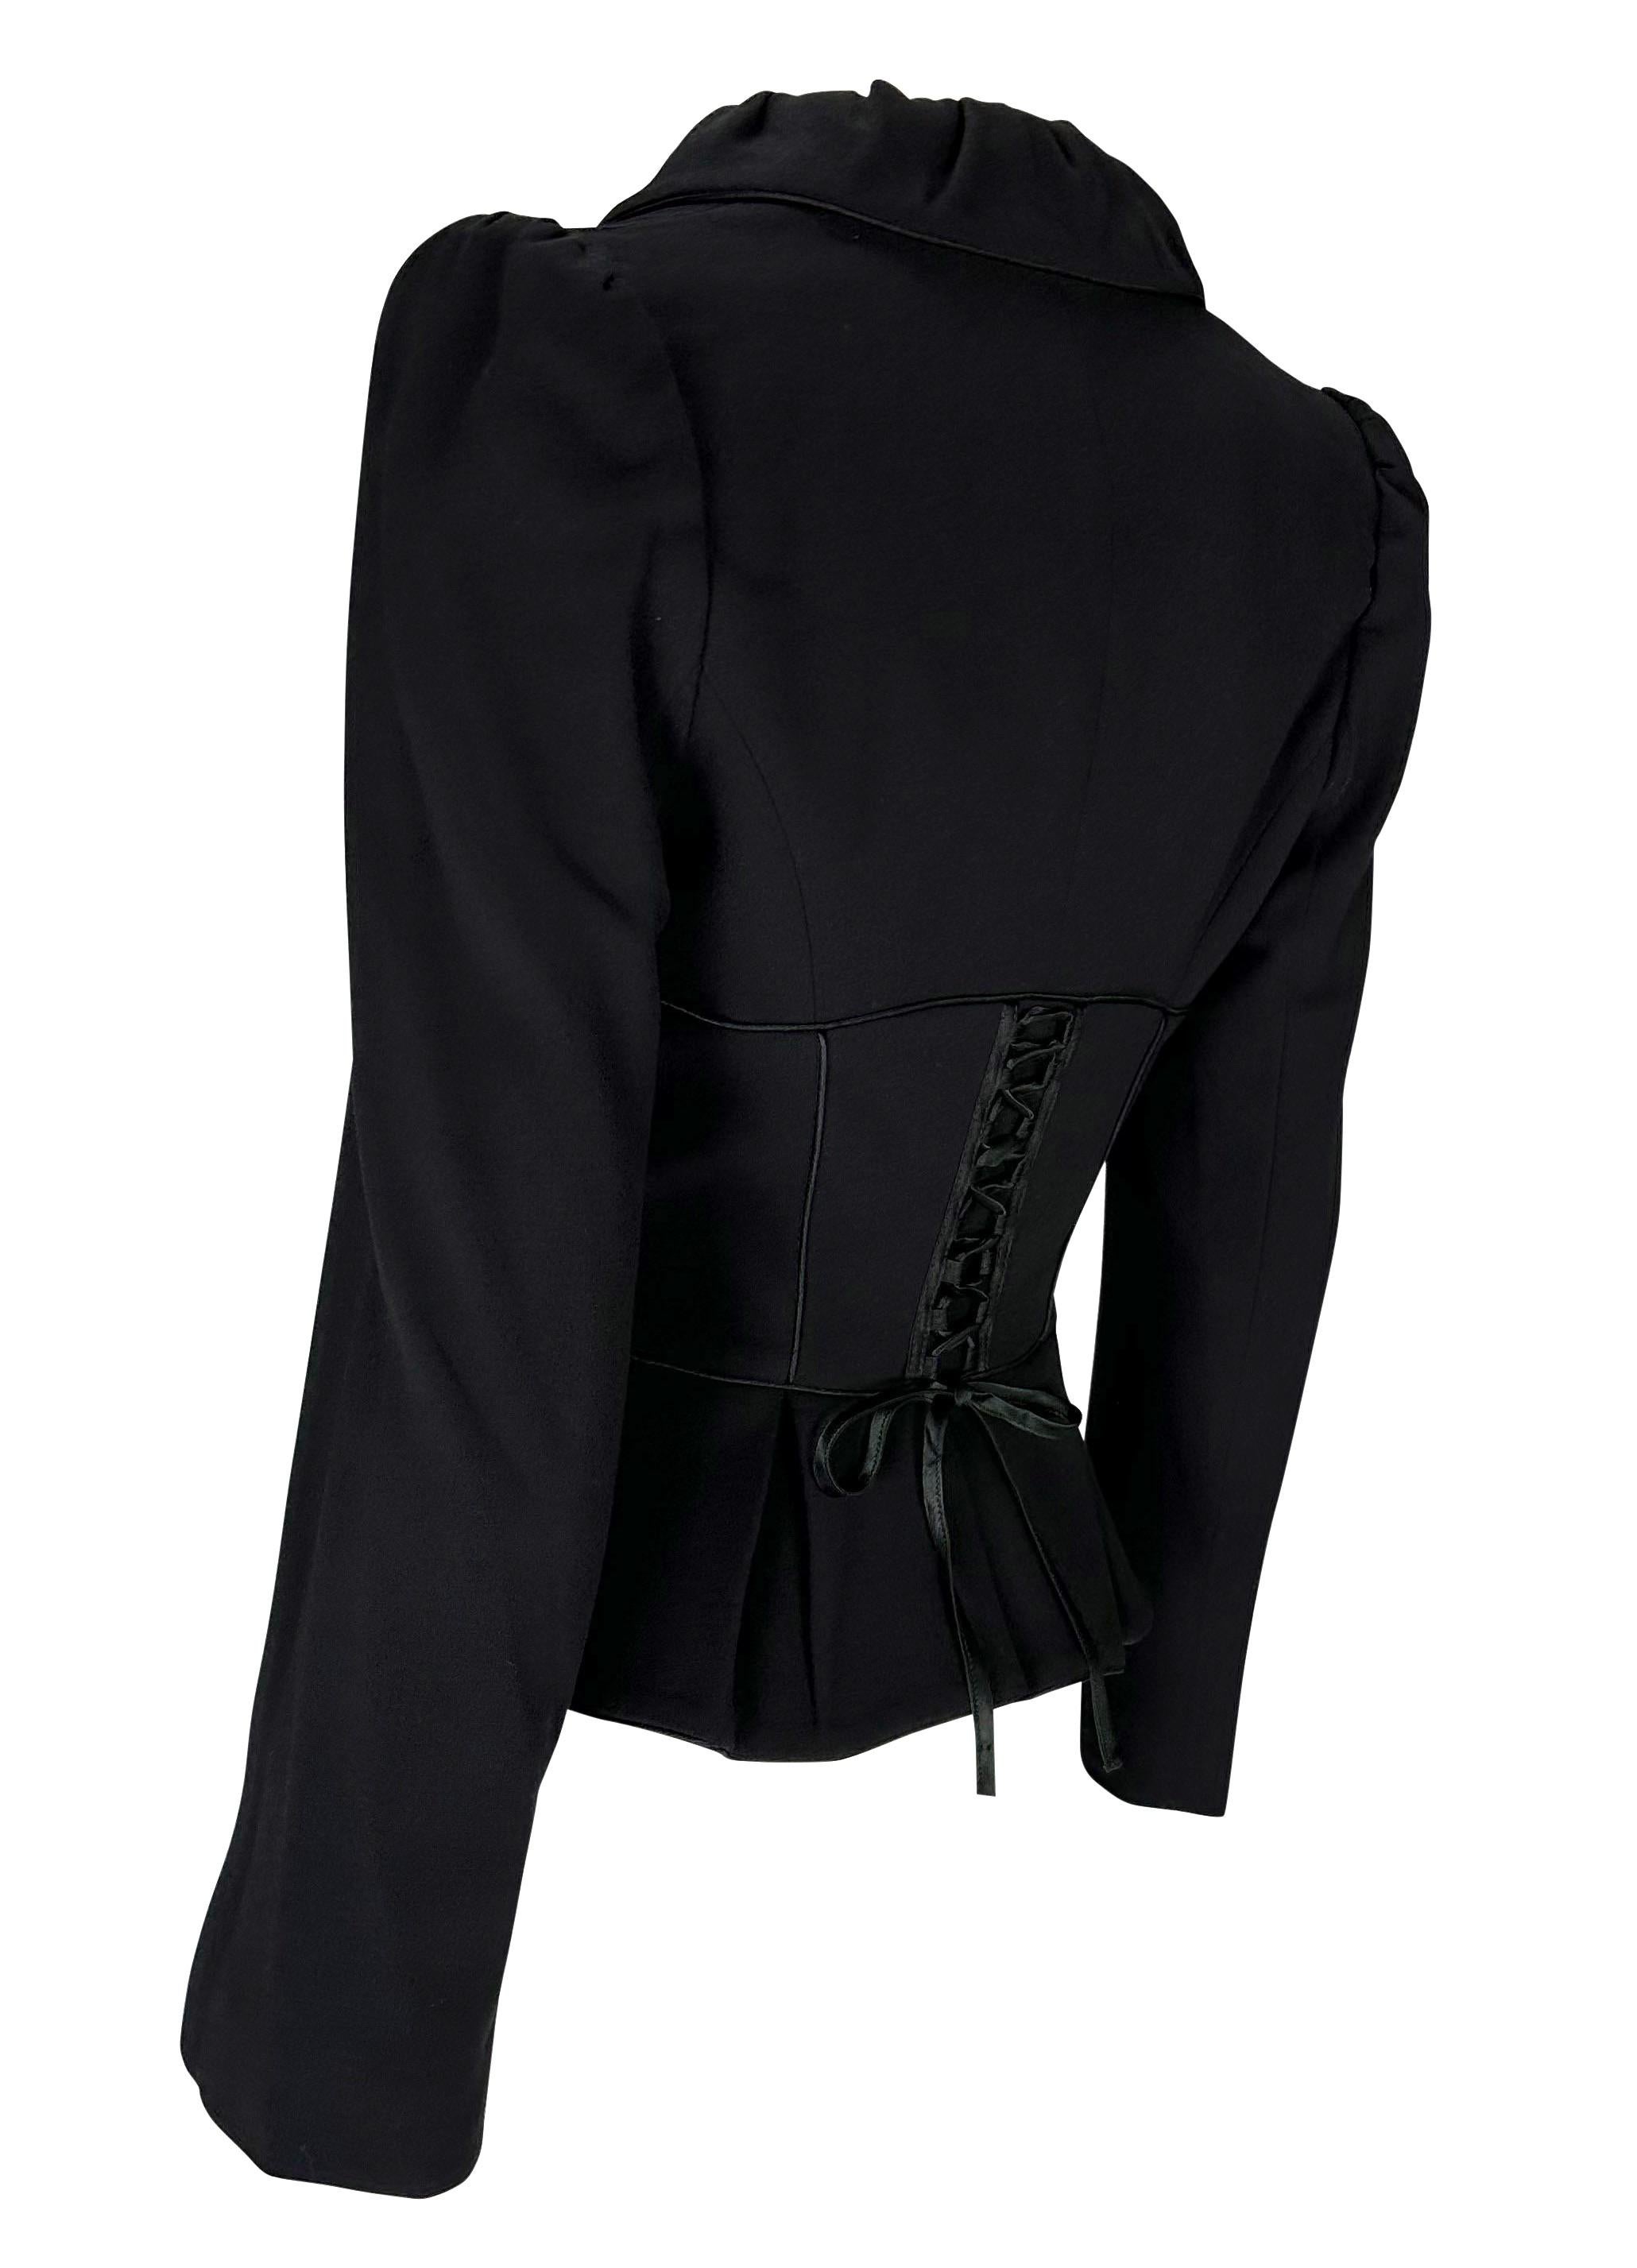 2000s Emanuel Ungaro Corset Lace-Up Black Cinched Blazer Jacket For Sale 2